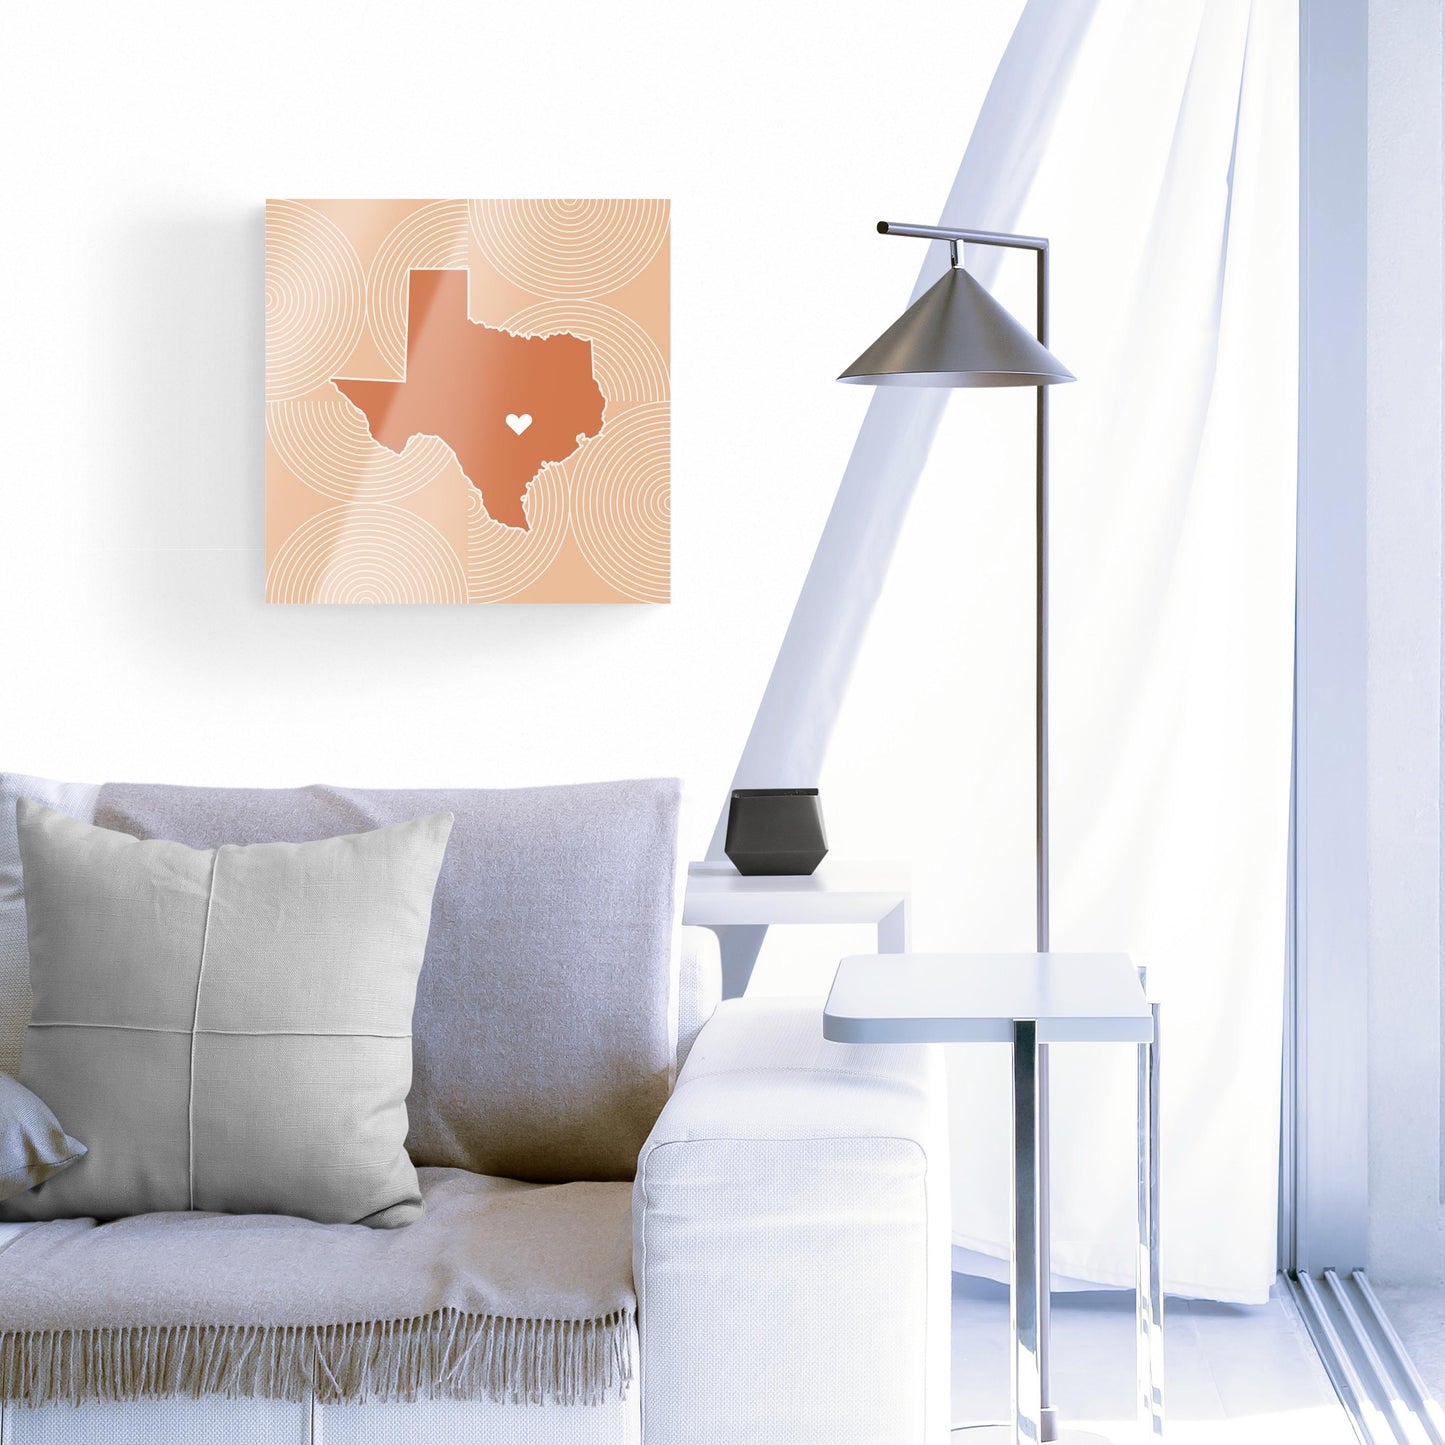 Modern Minimalist Texas Austin Heart | Hi-Def Glass Art | Eaches | Min 1